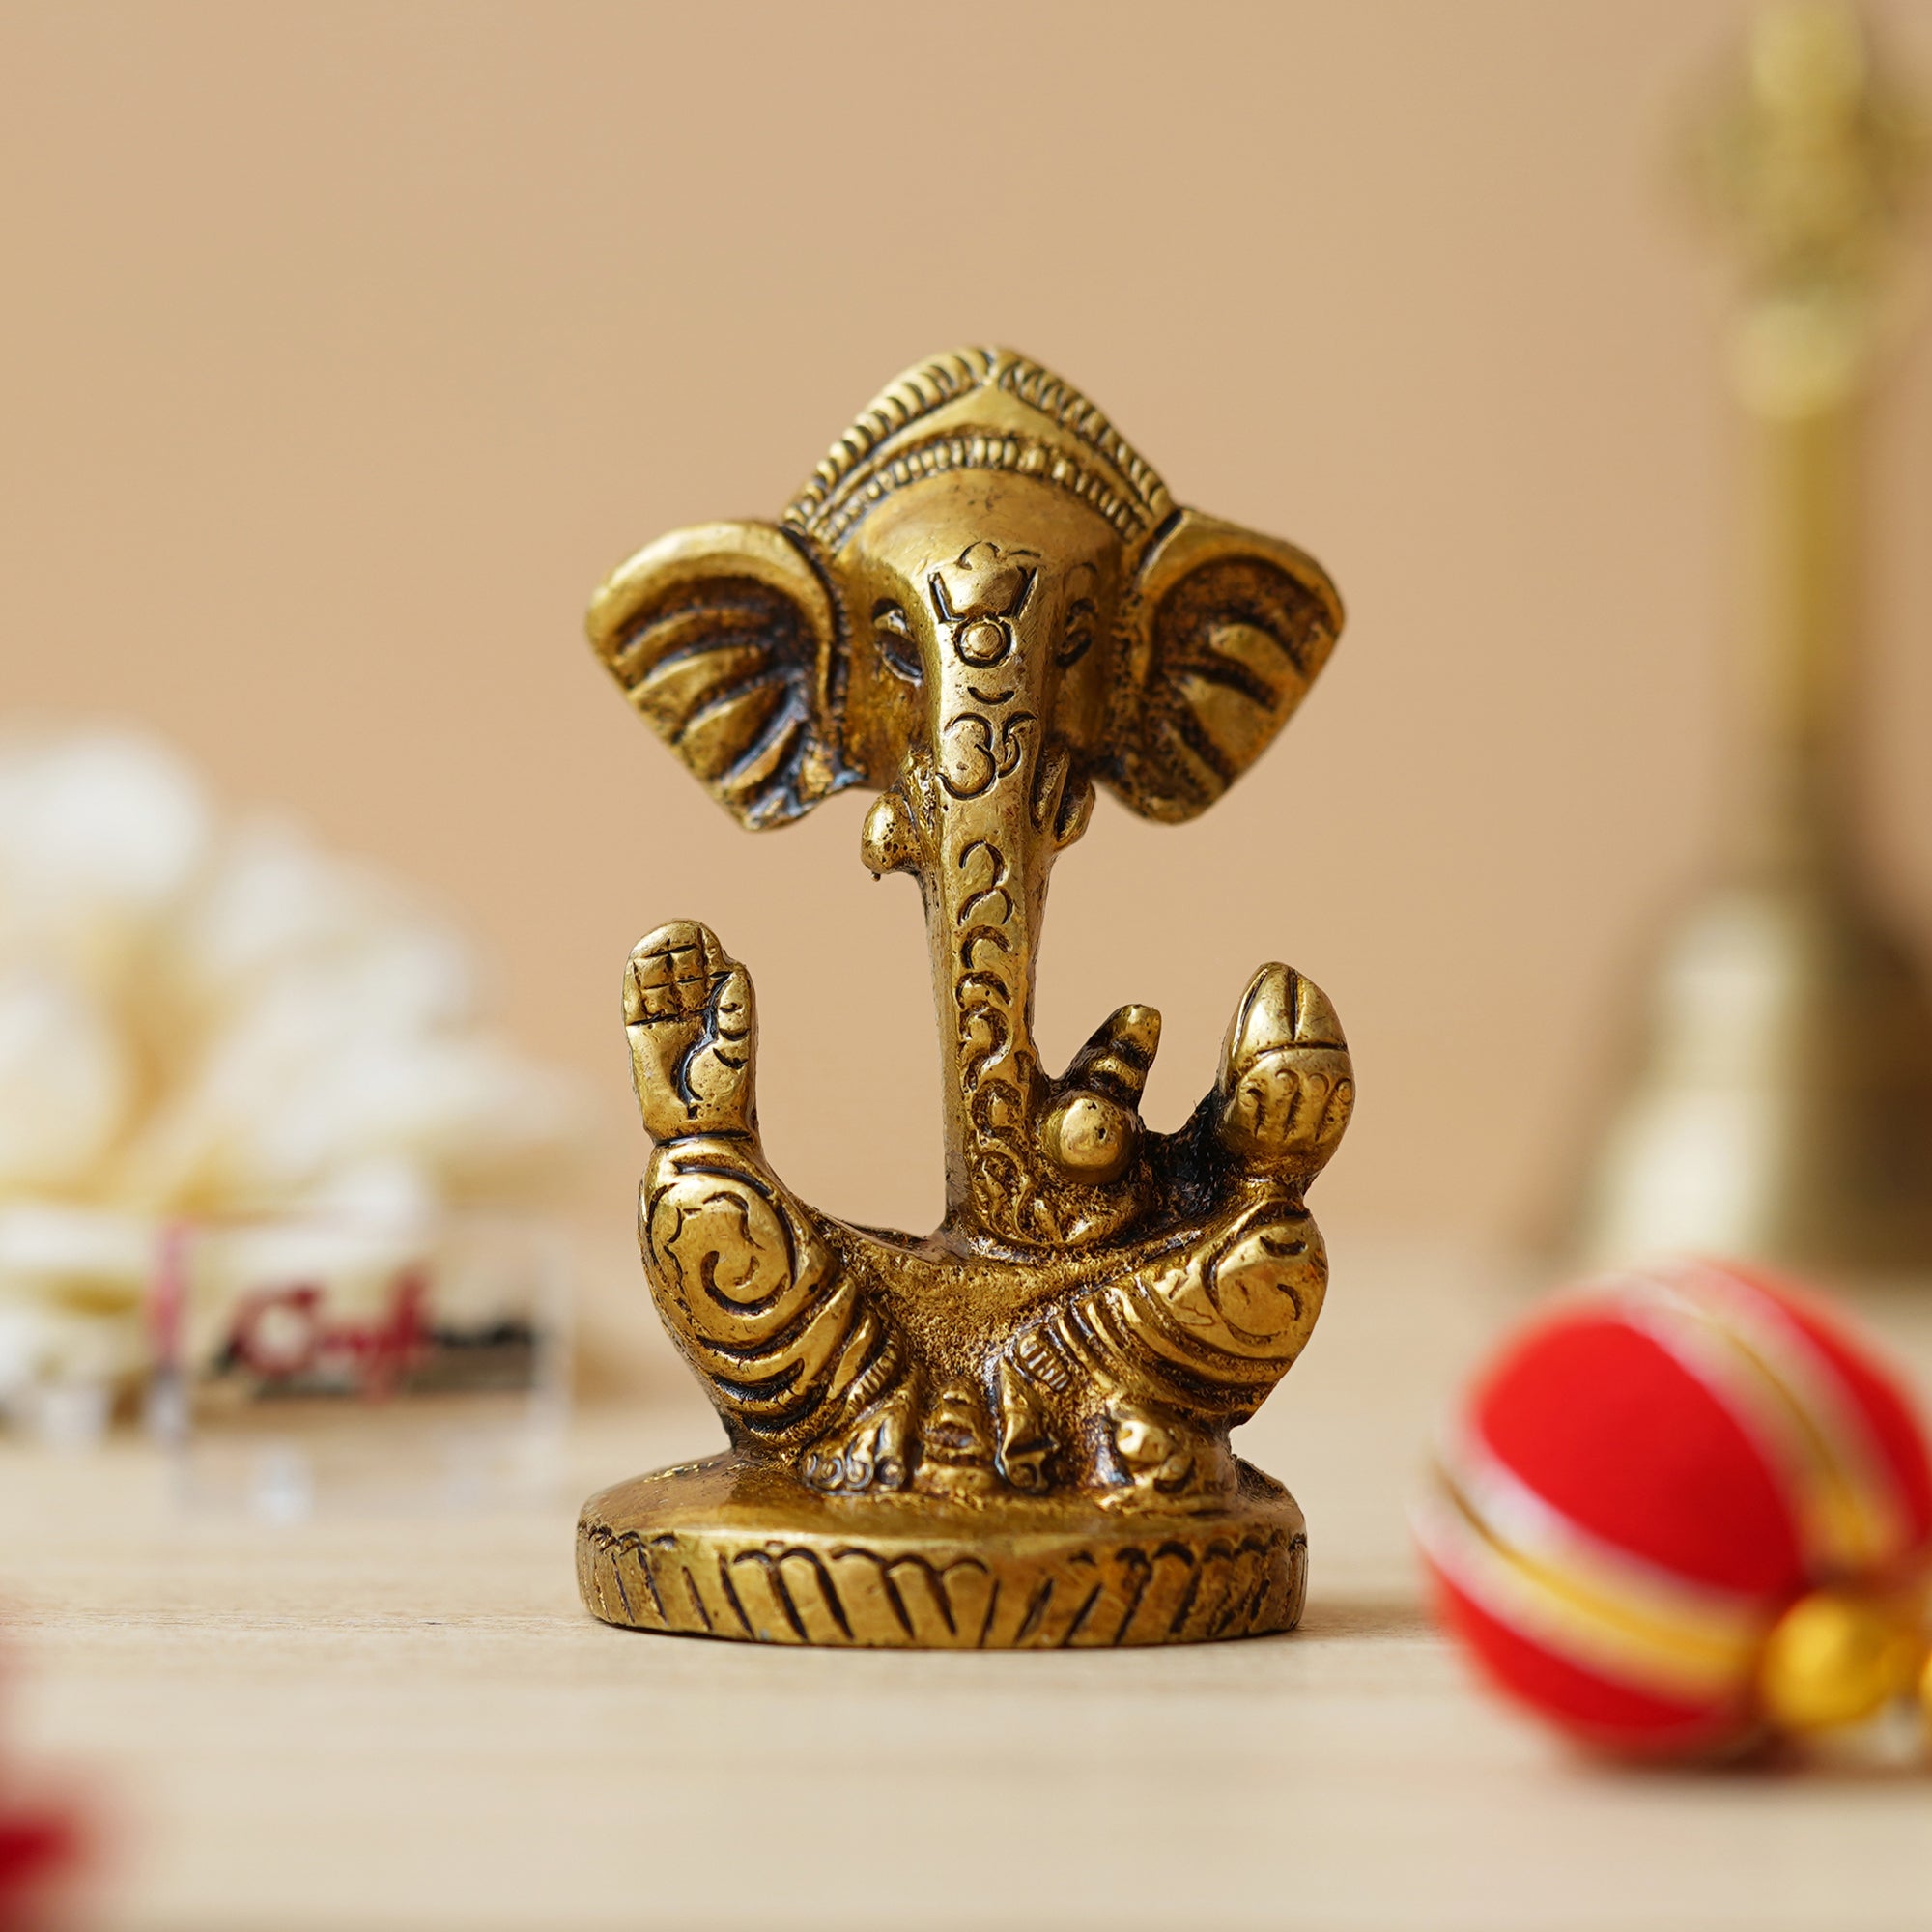 Golden Brass Blessing Lord Ganesha Idol Murti - God Statue for Car Dashboard, Home Decor, Office Desk, Temple Mandir 4